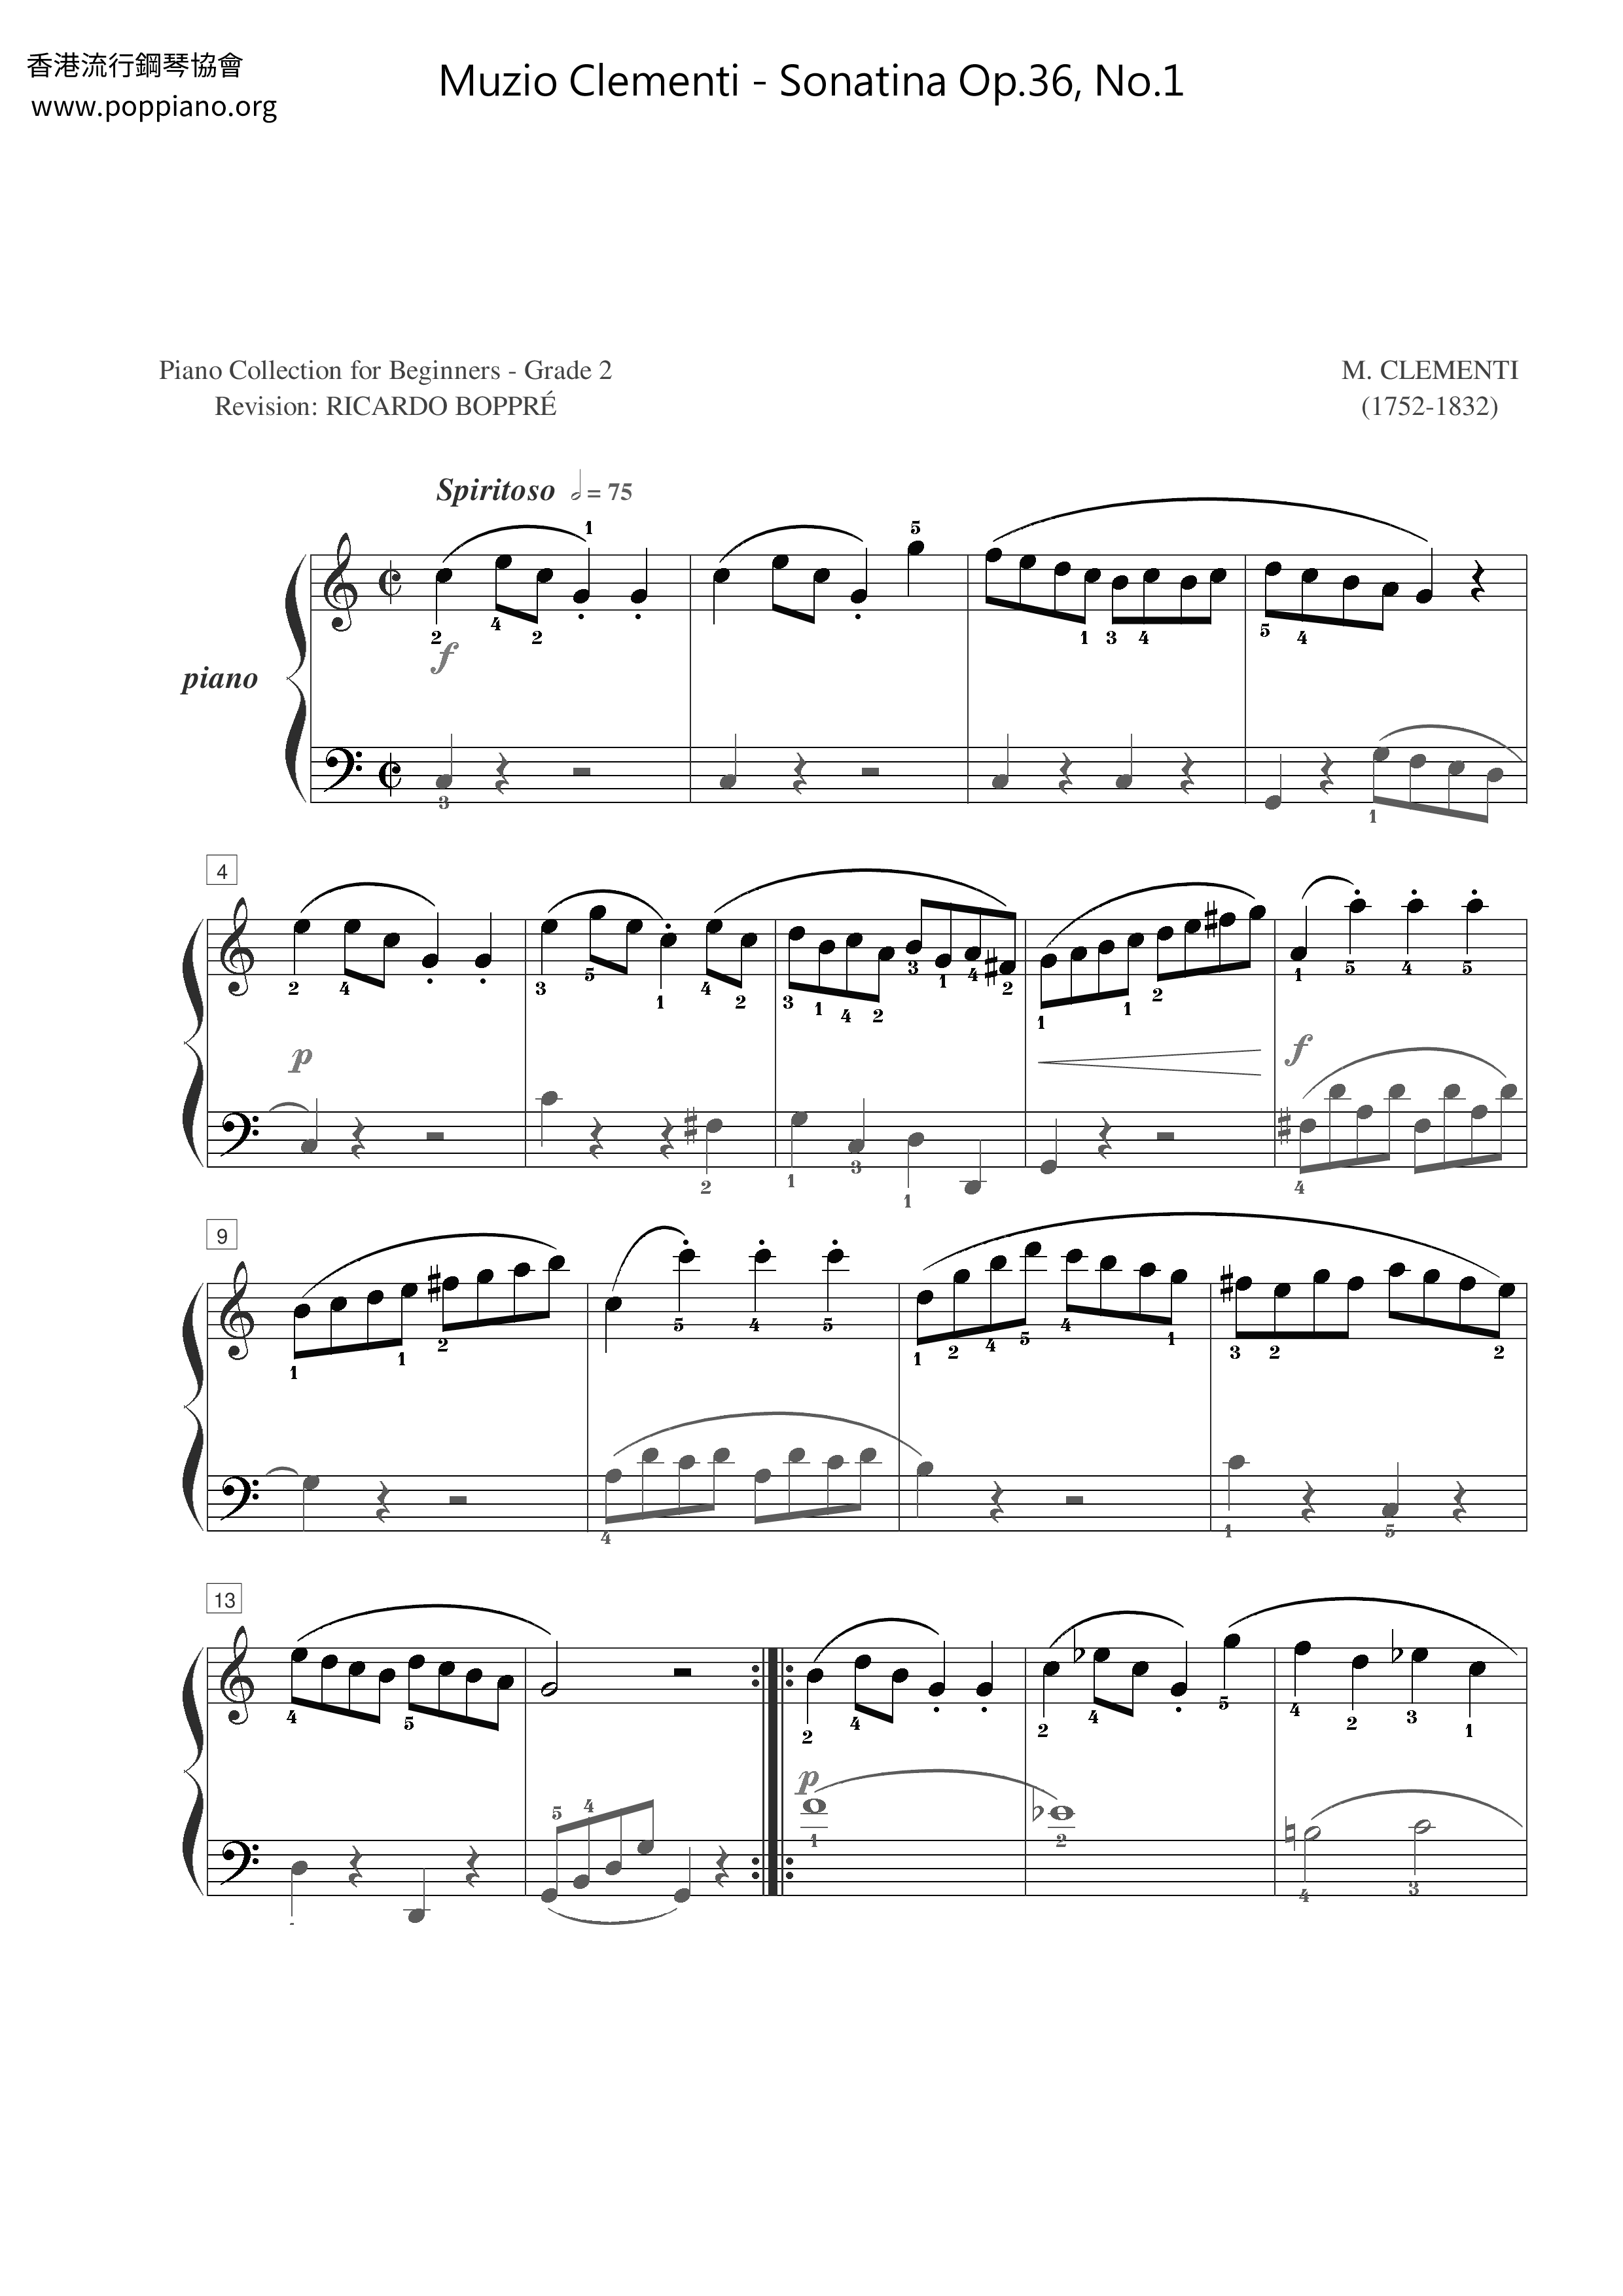 Sonatina Op.36, No.1 Score